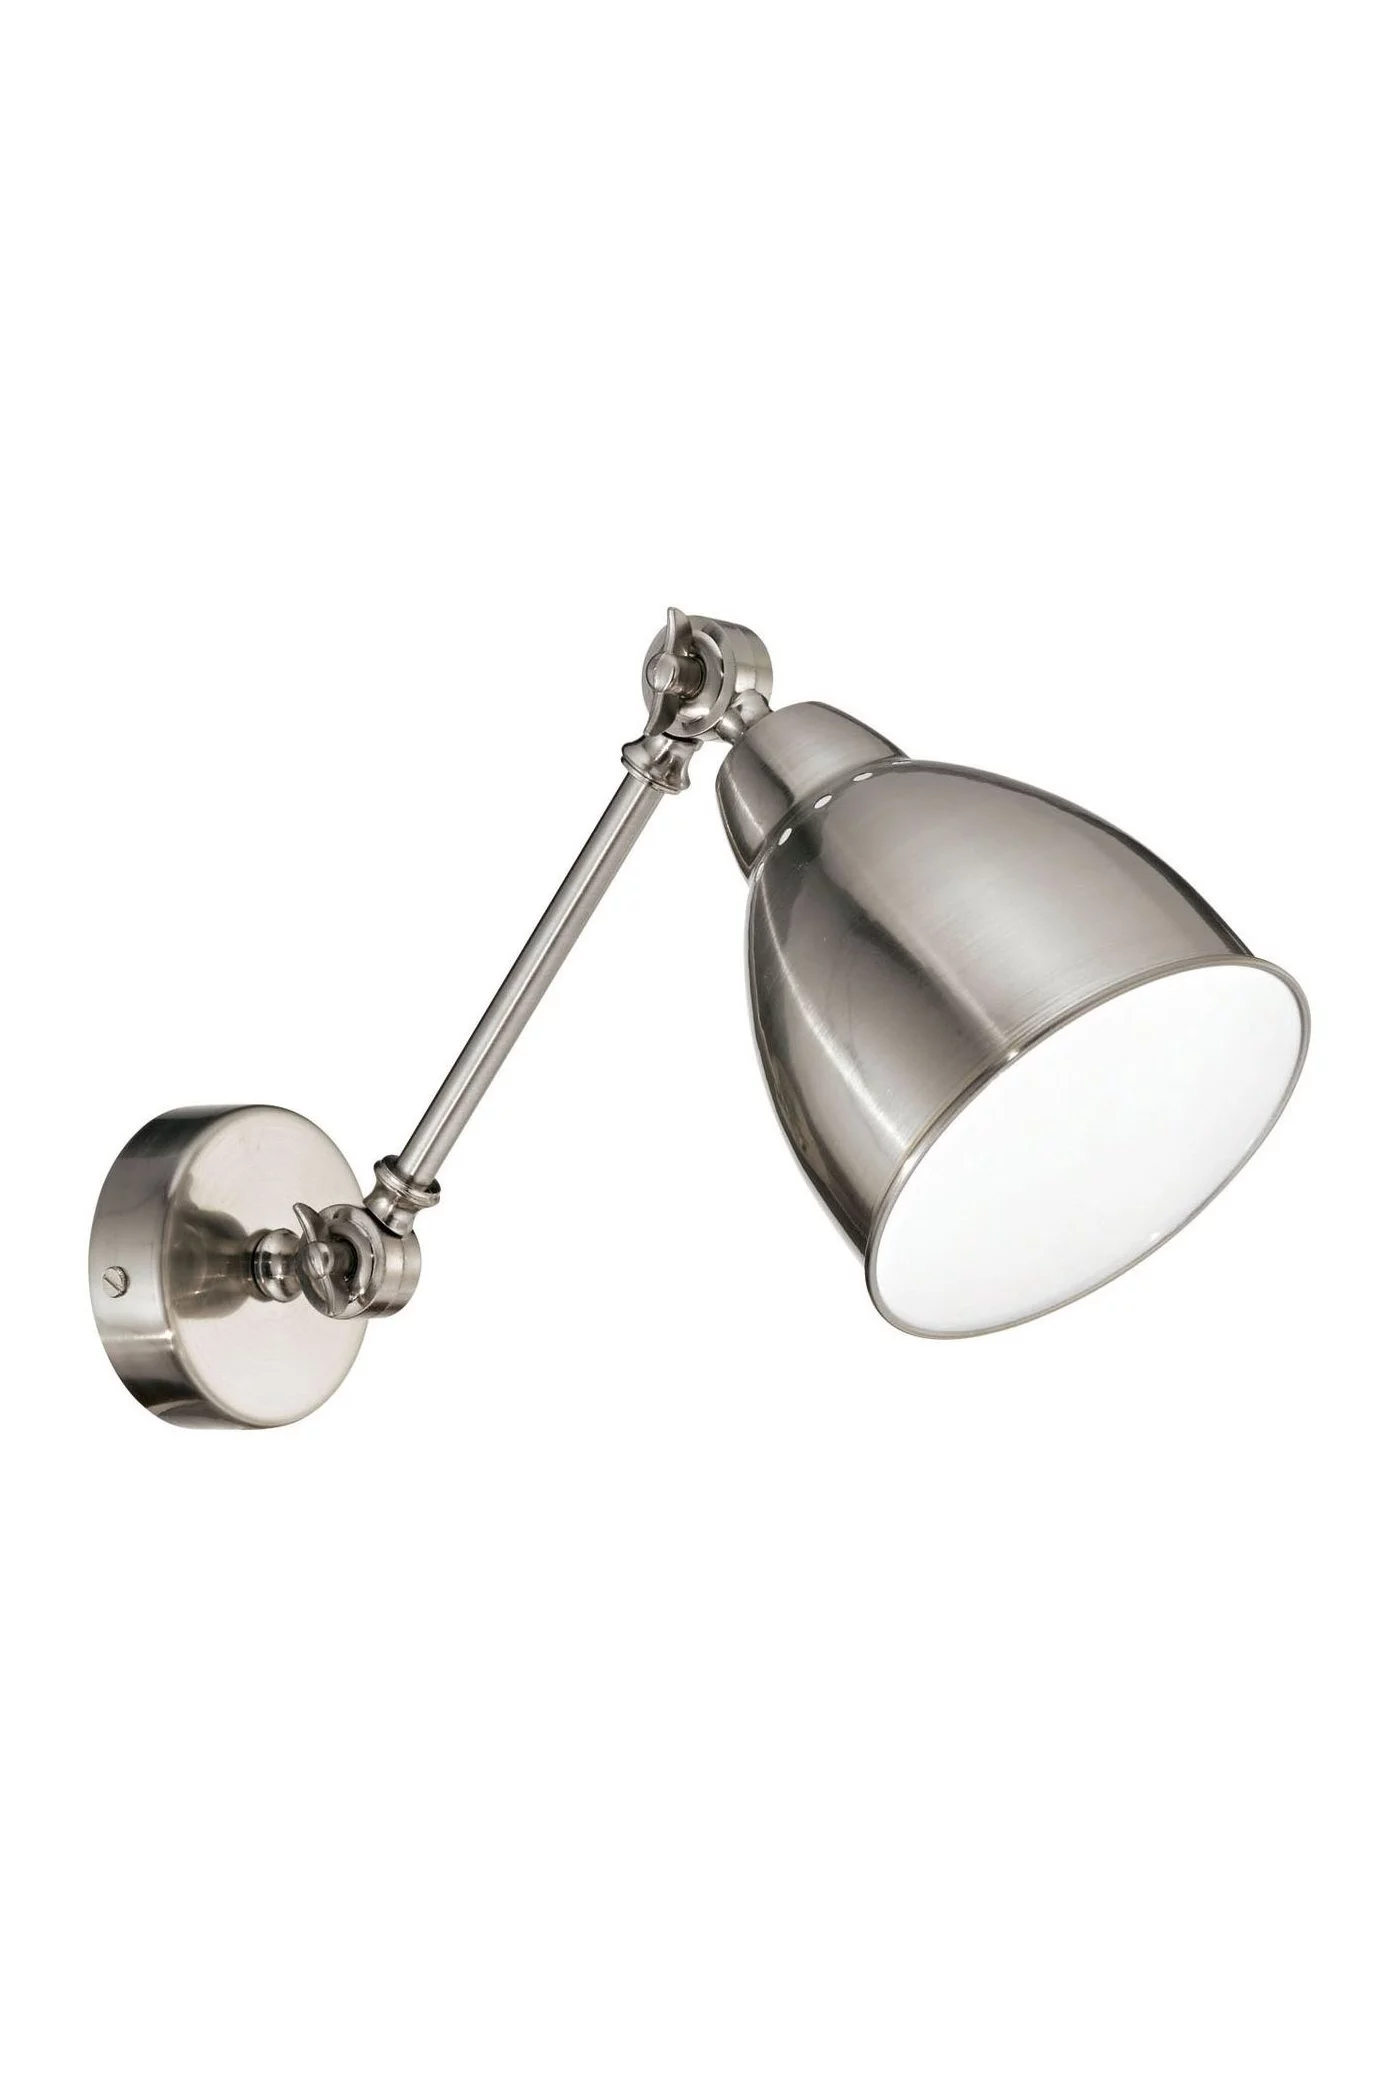   
                        
                        Бра IDEAL LUX (Италия) 81298    
                         в стиле Скандинавский.  
                        Тип источника света: светодиодная лампа, сменная.                                                 Цвета плафонов и подвесок: Серый.                         Материал: Металл.                          фото 1